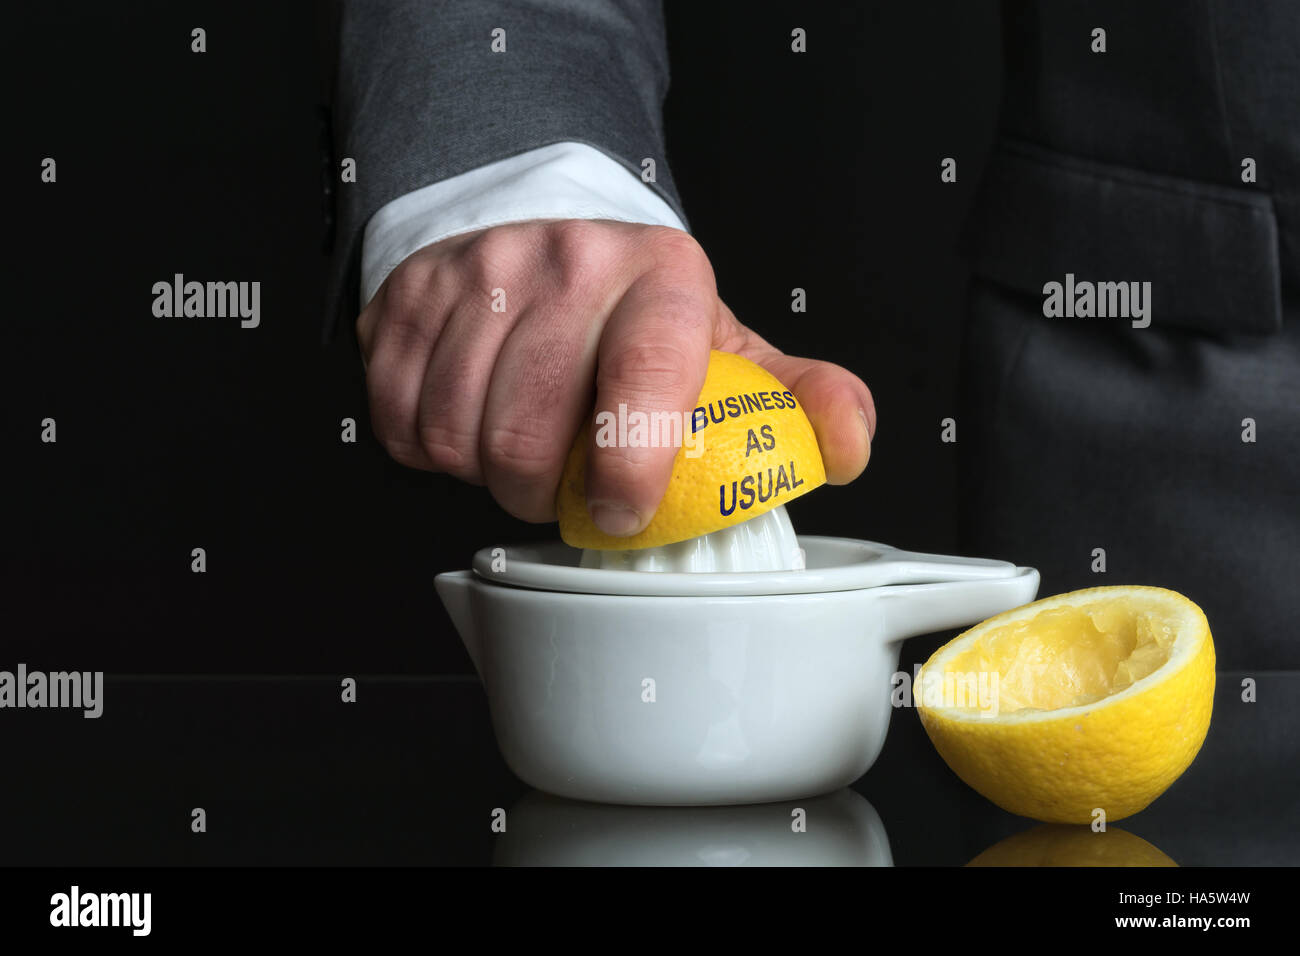 Concepto de negocio como de costumbre con limón y un hombre Foto de stock